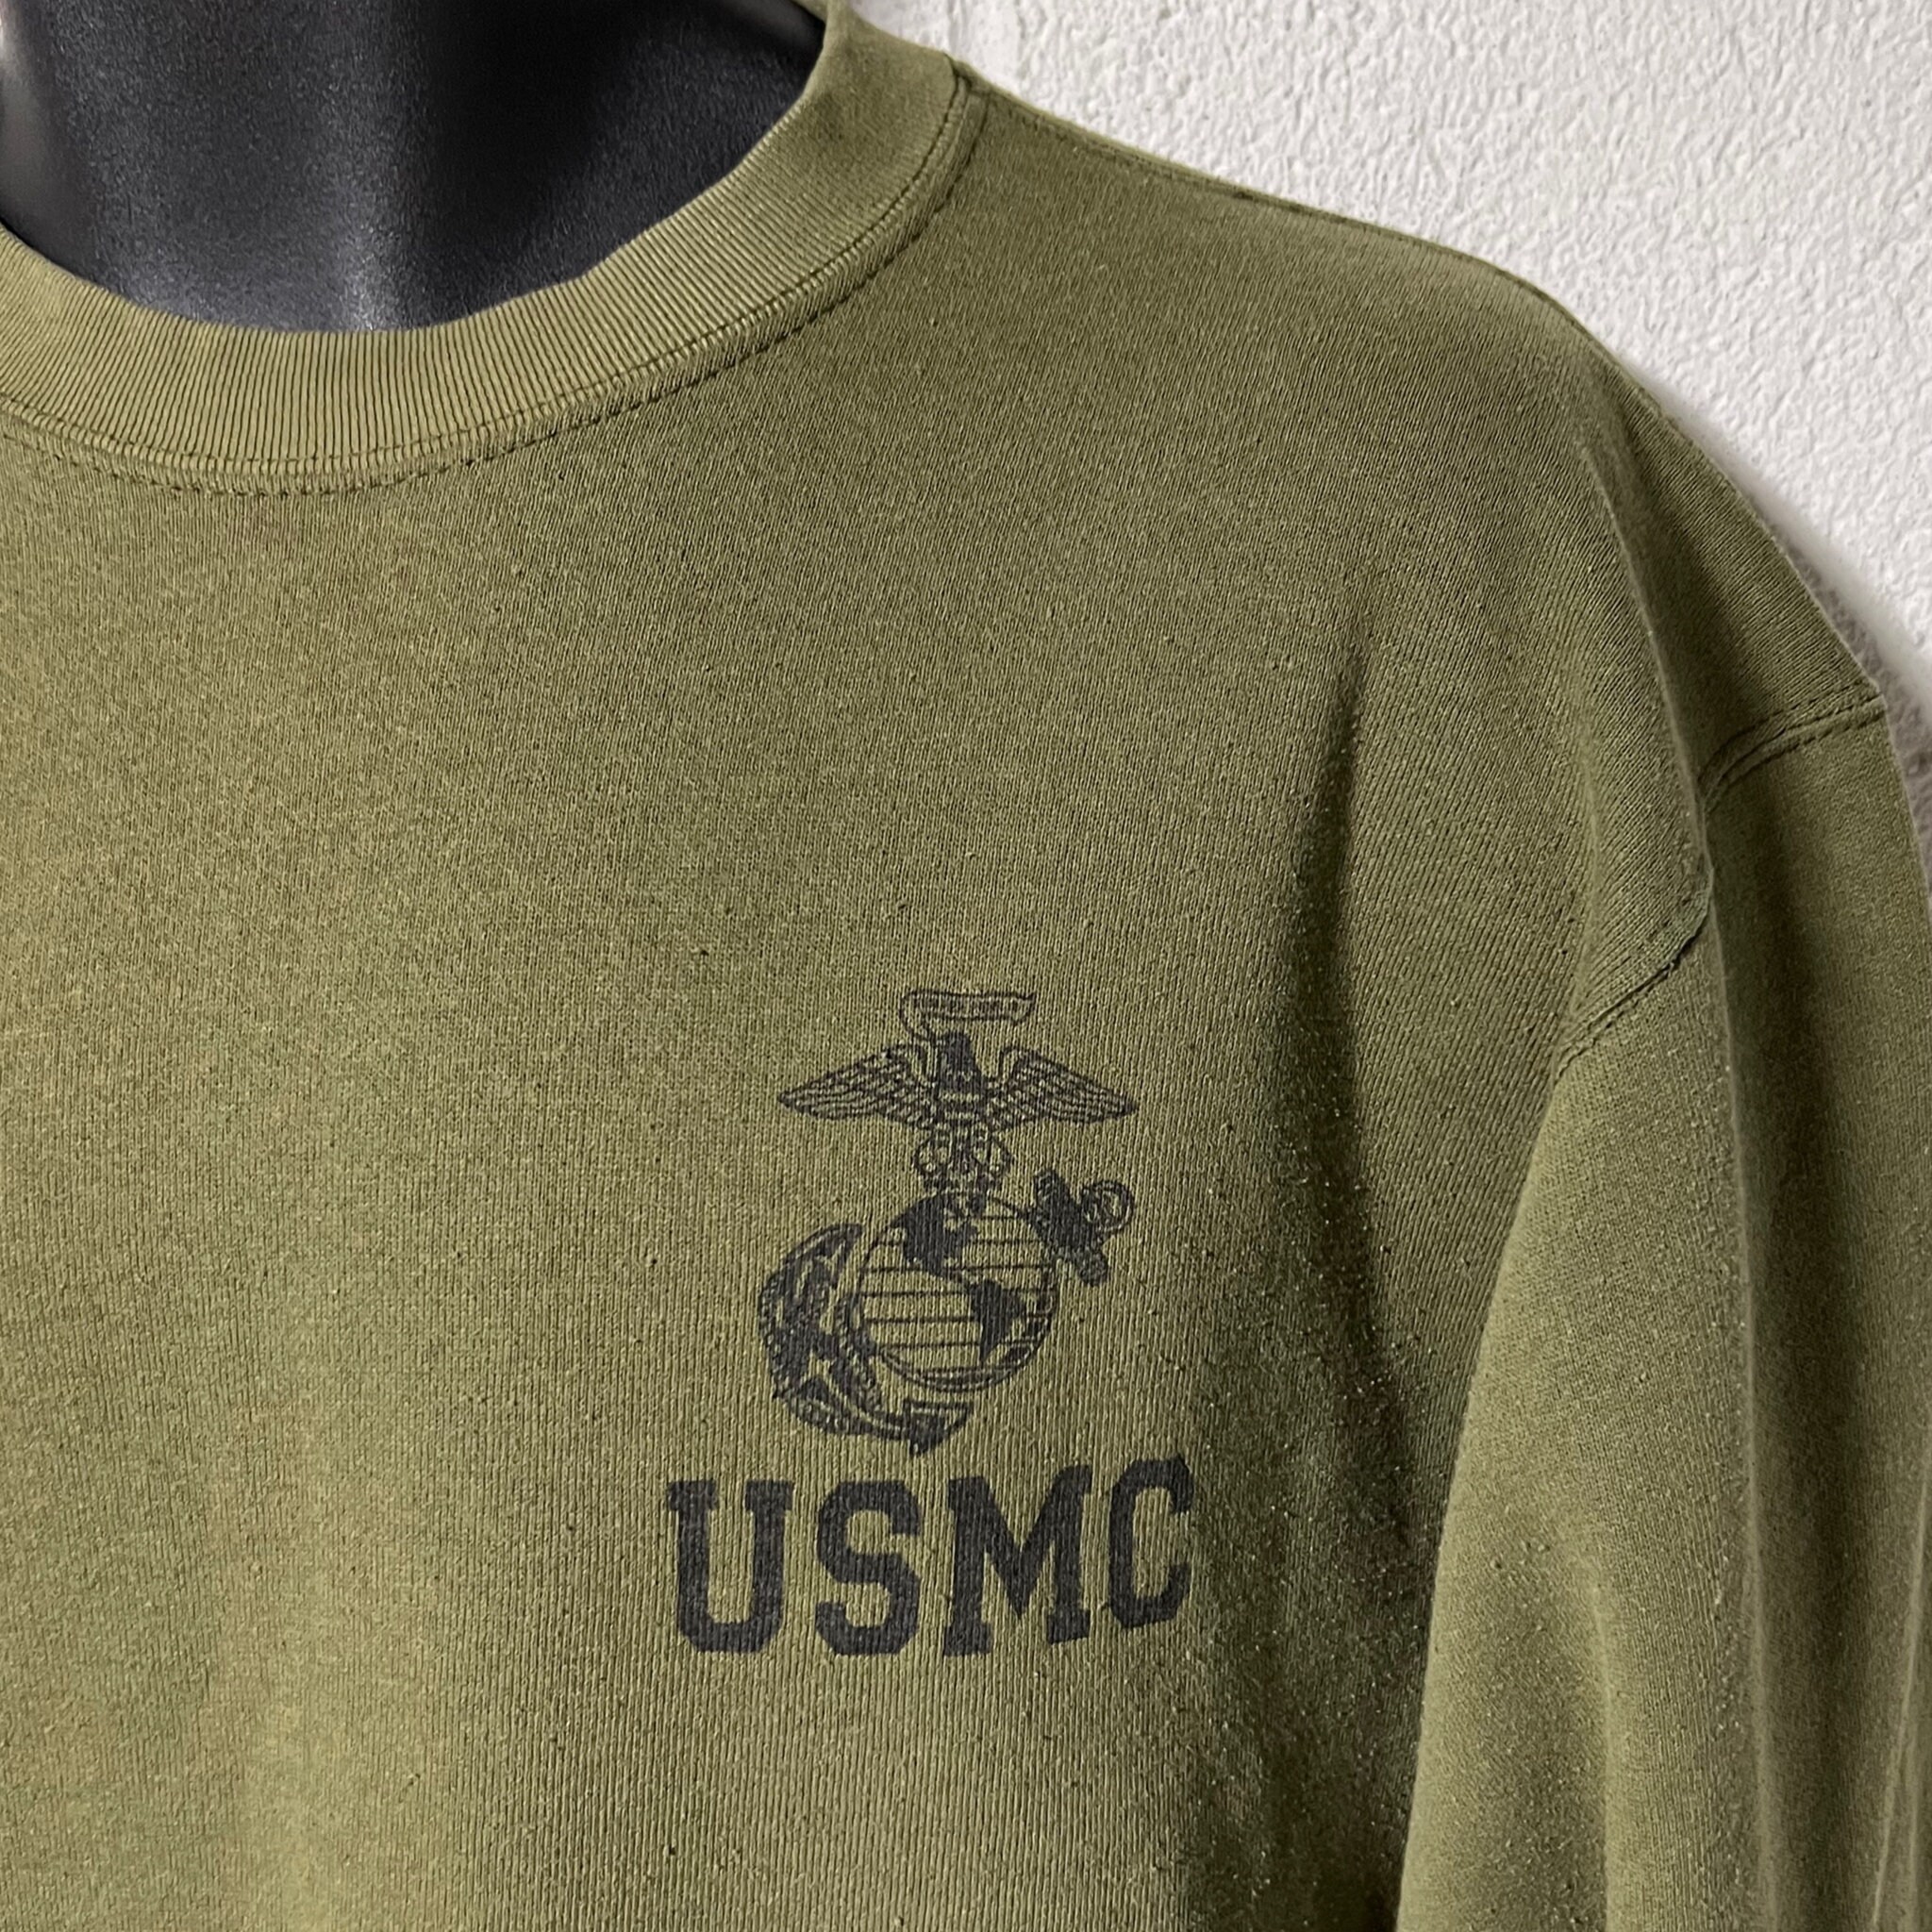 Vintage Campbellsville Apparel USMC US Marine Corps Green Crewneck